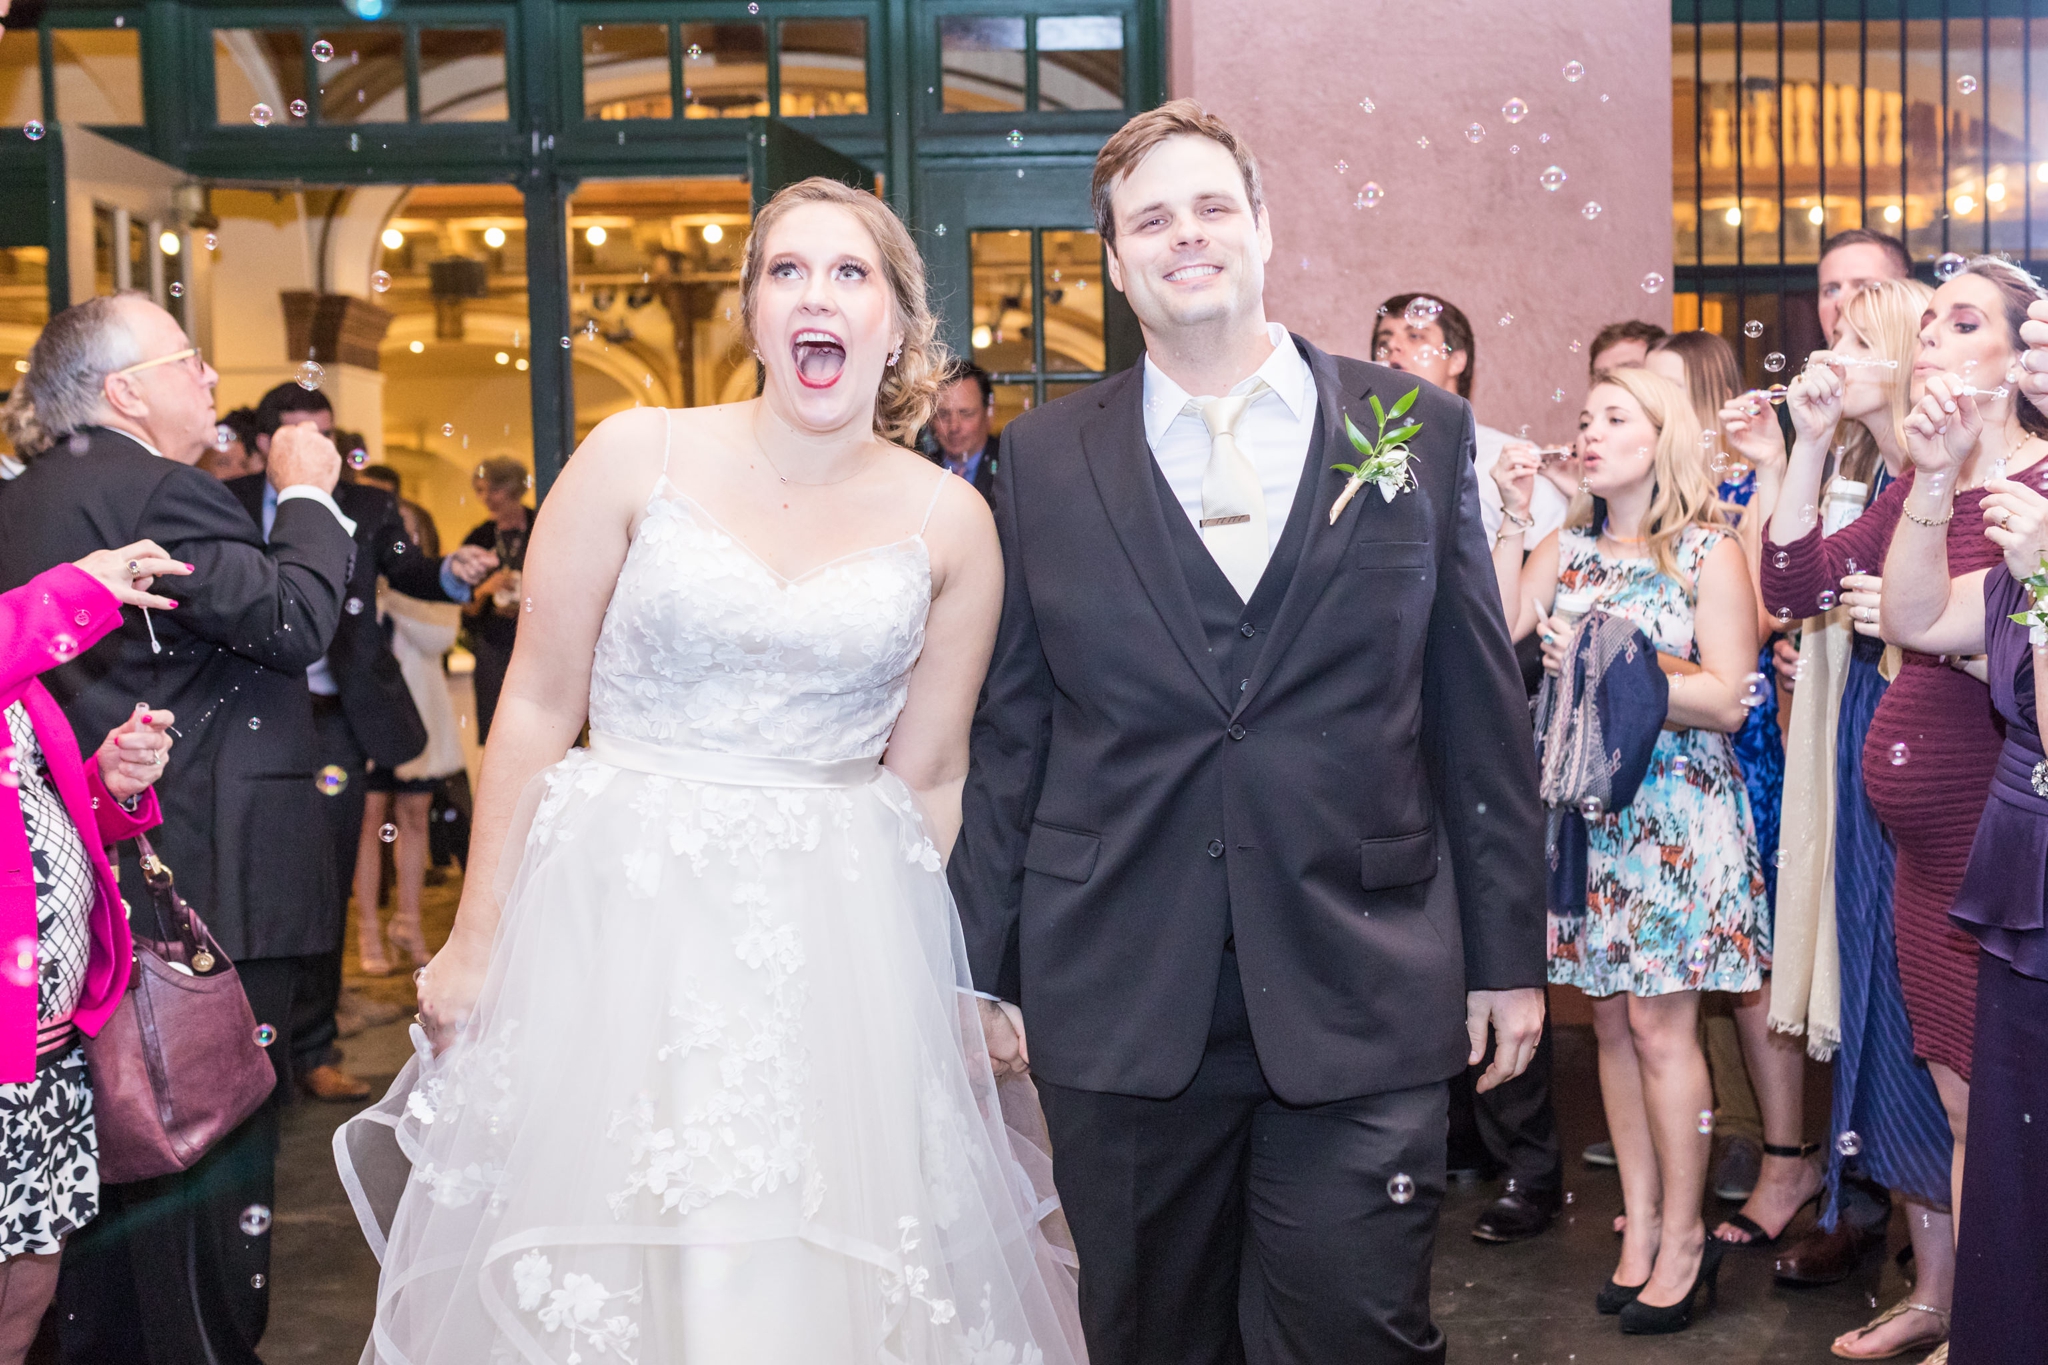 A Hunter Green and White Wedding at Sunset Station in San Antonio, TX by Dawn Elizabeth Studios, San Antonio Wedding Photographer